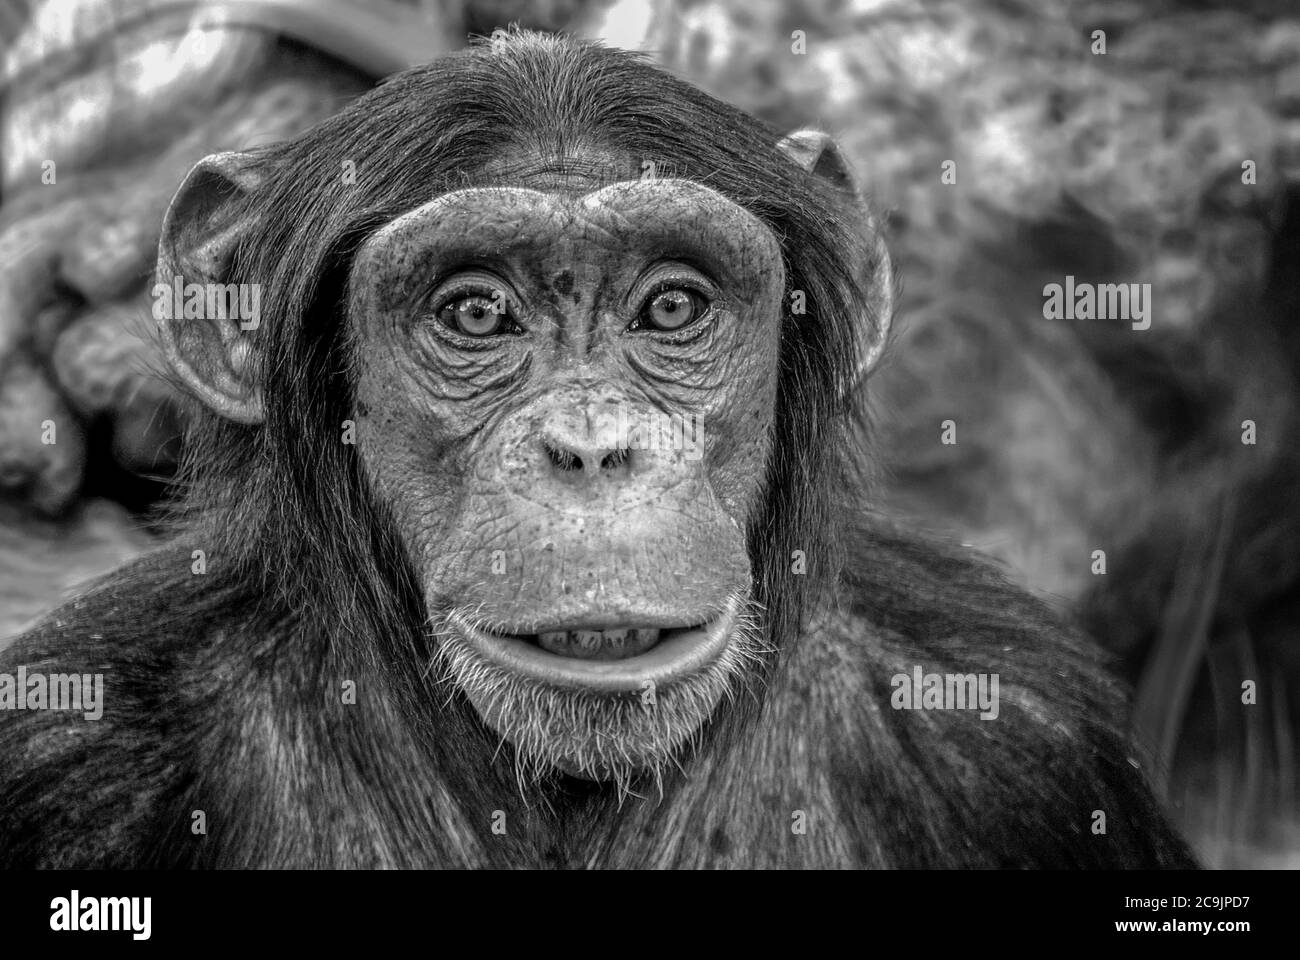 Close-up portrait of a chimpanzee (Pan troglodytes). Stock Photo